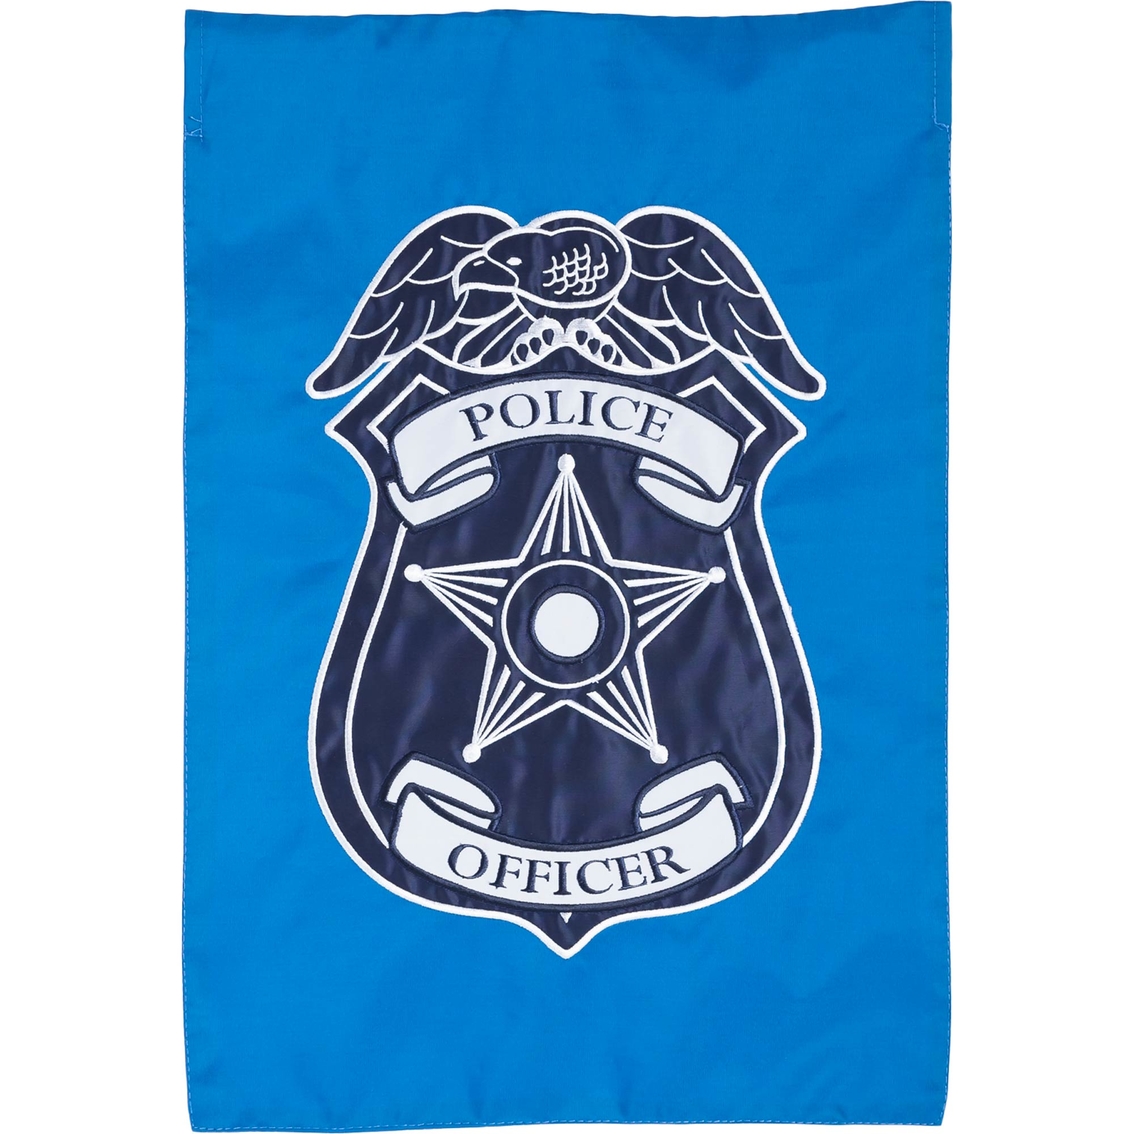 Evergreen Police Department Applique Garden Flag - Image 2 of 4